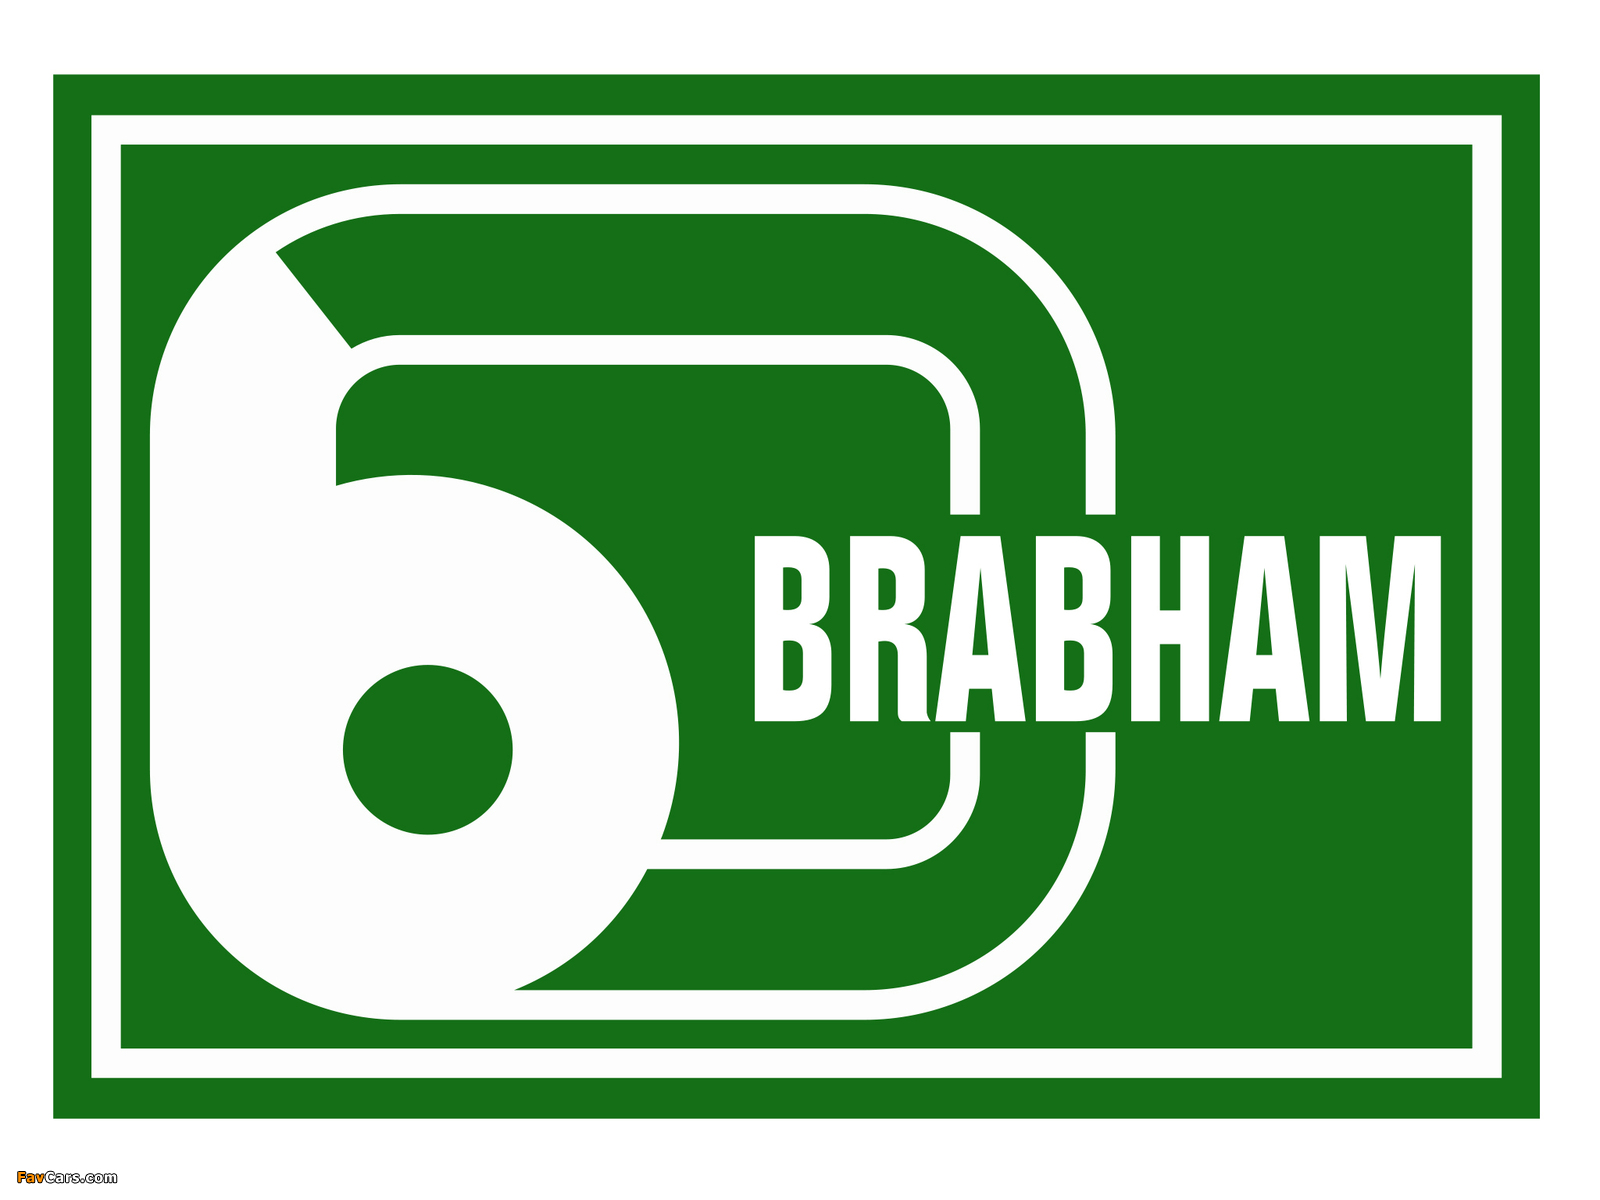 Brabham wallpapers (1600 x 1200)